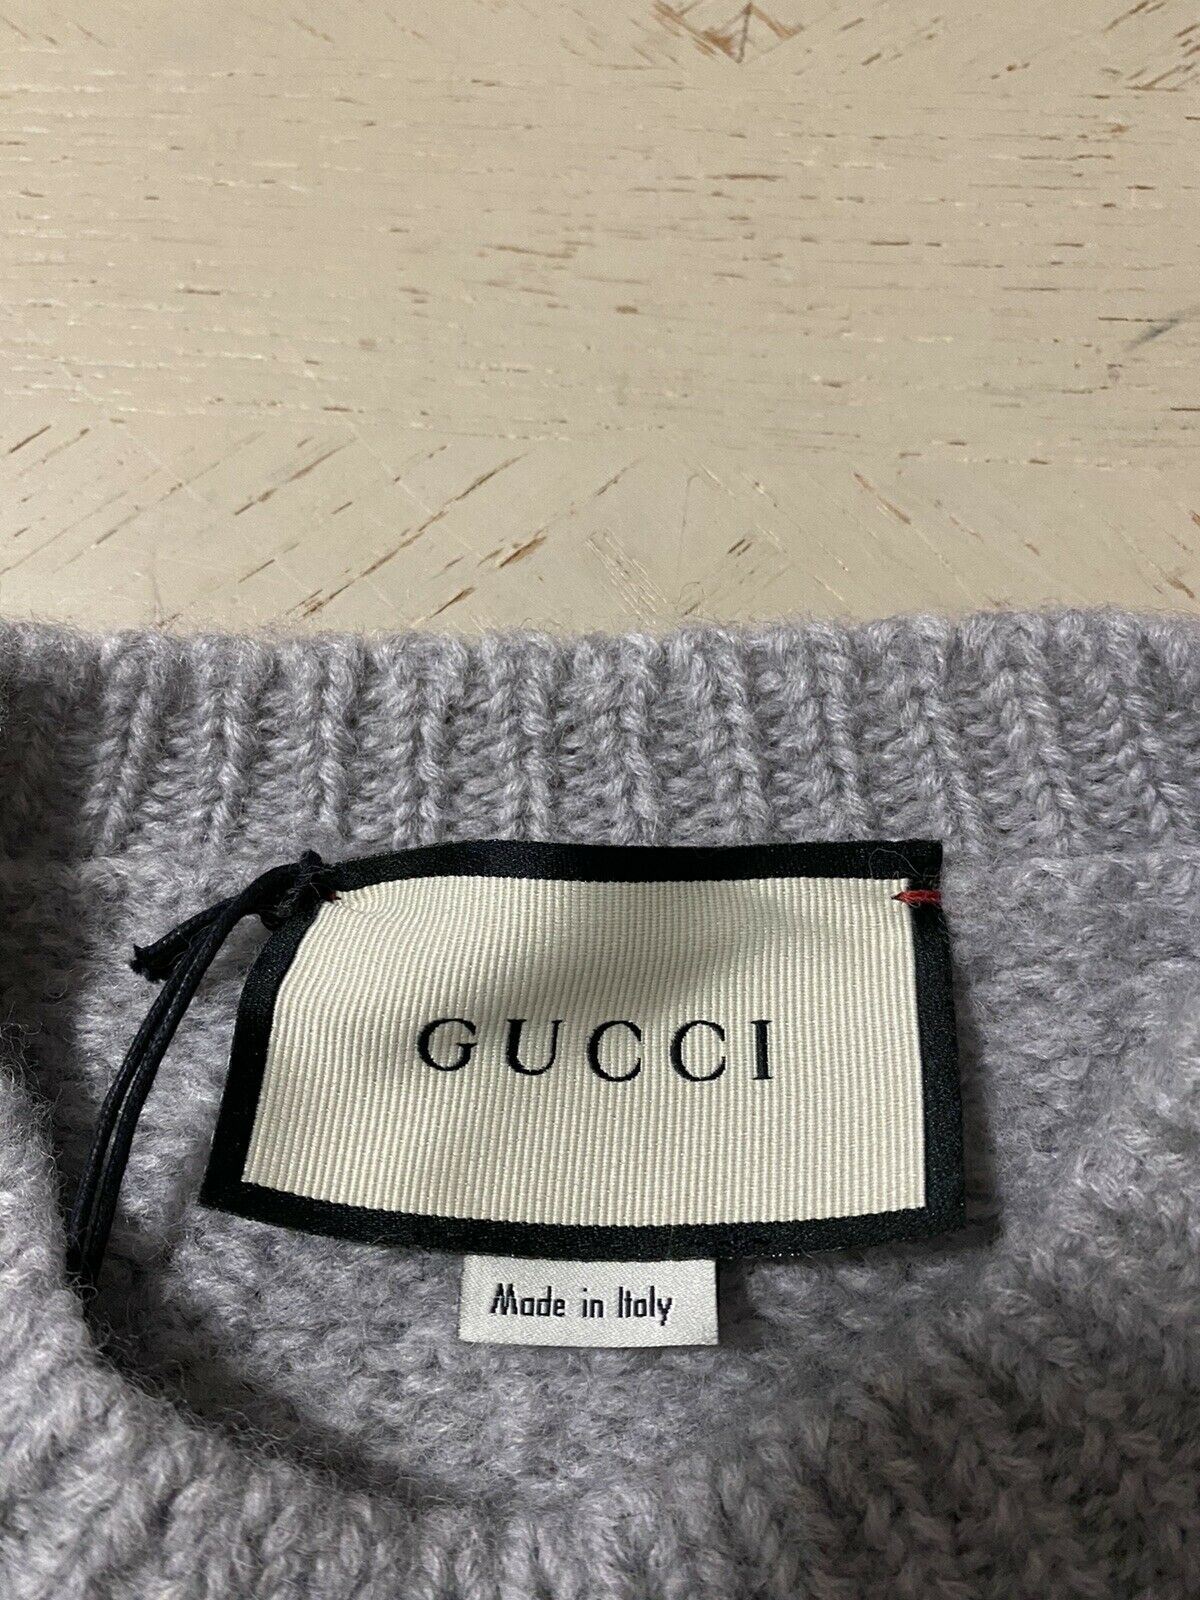 NWT $1600 Gucci Men Wool Crewneck Sweater Light Gray M Italy